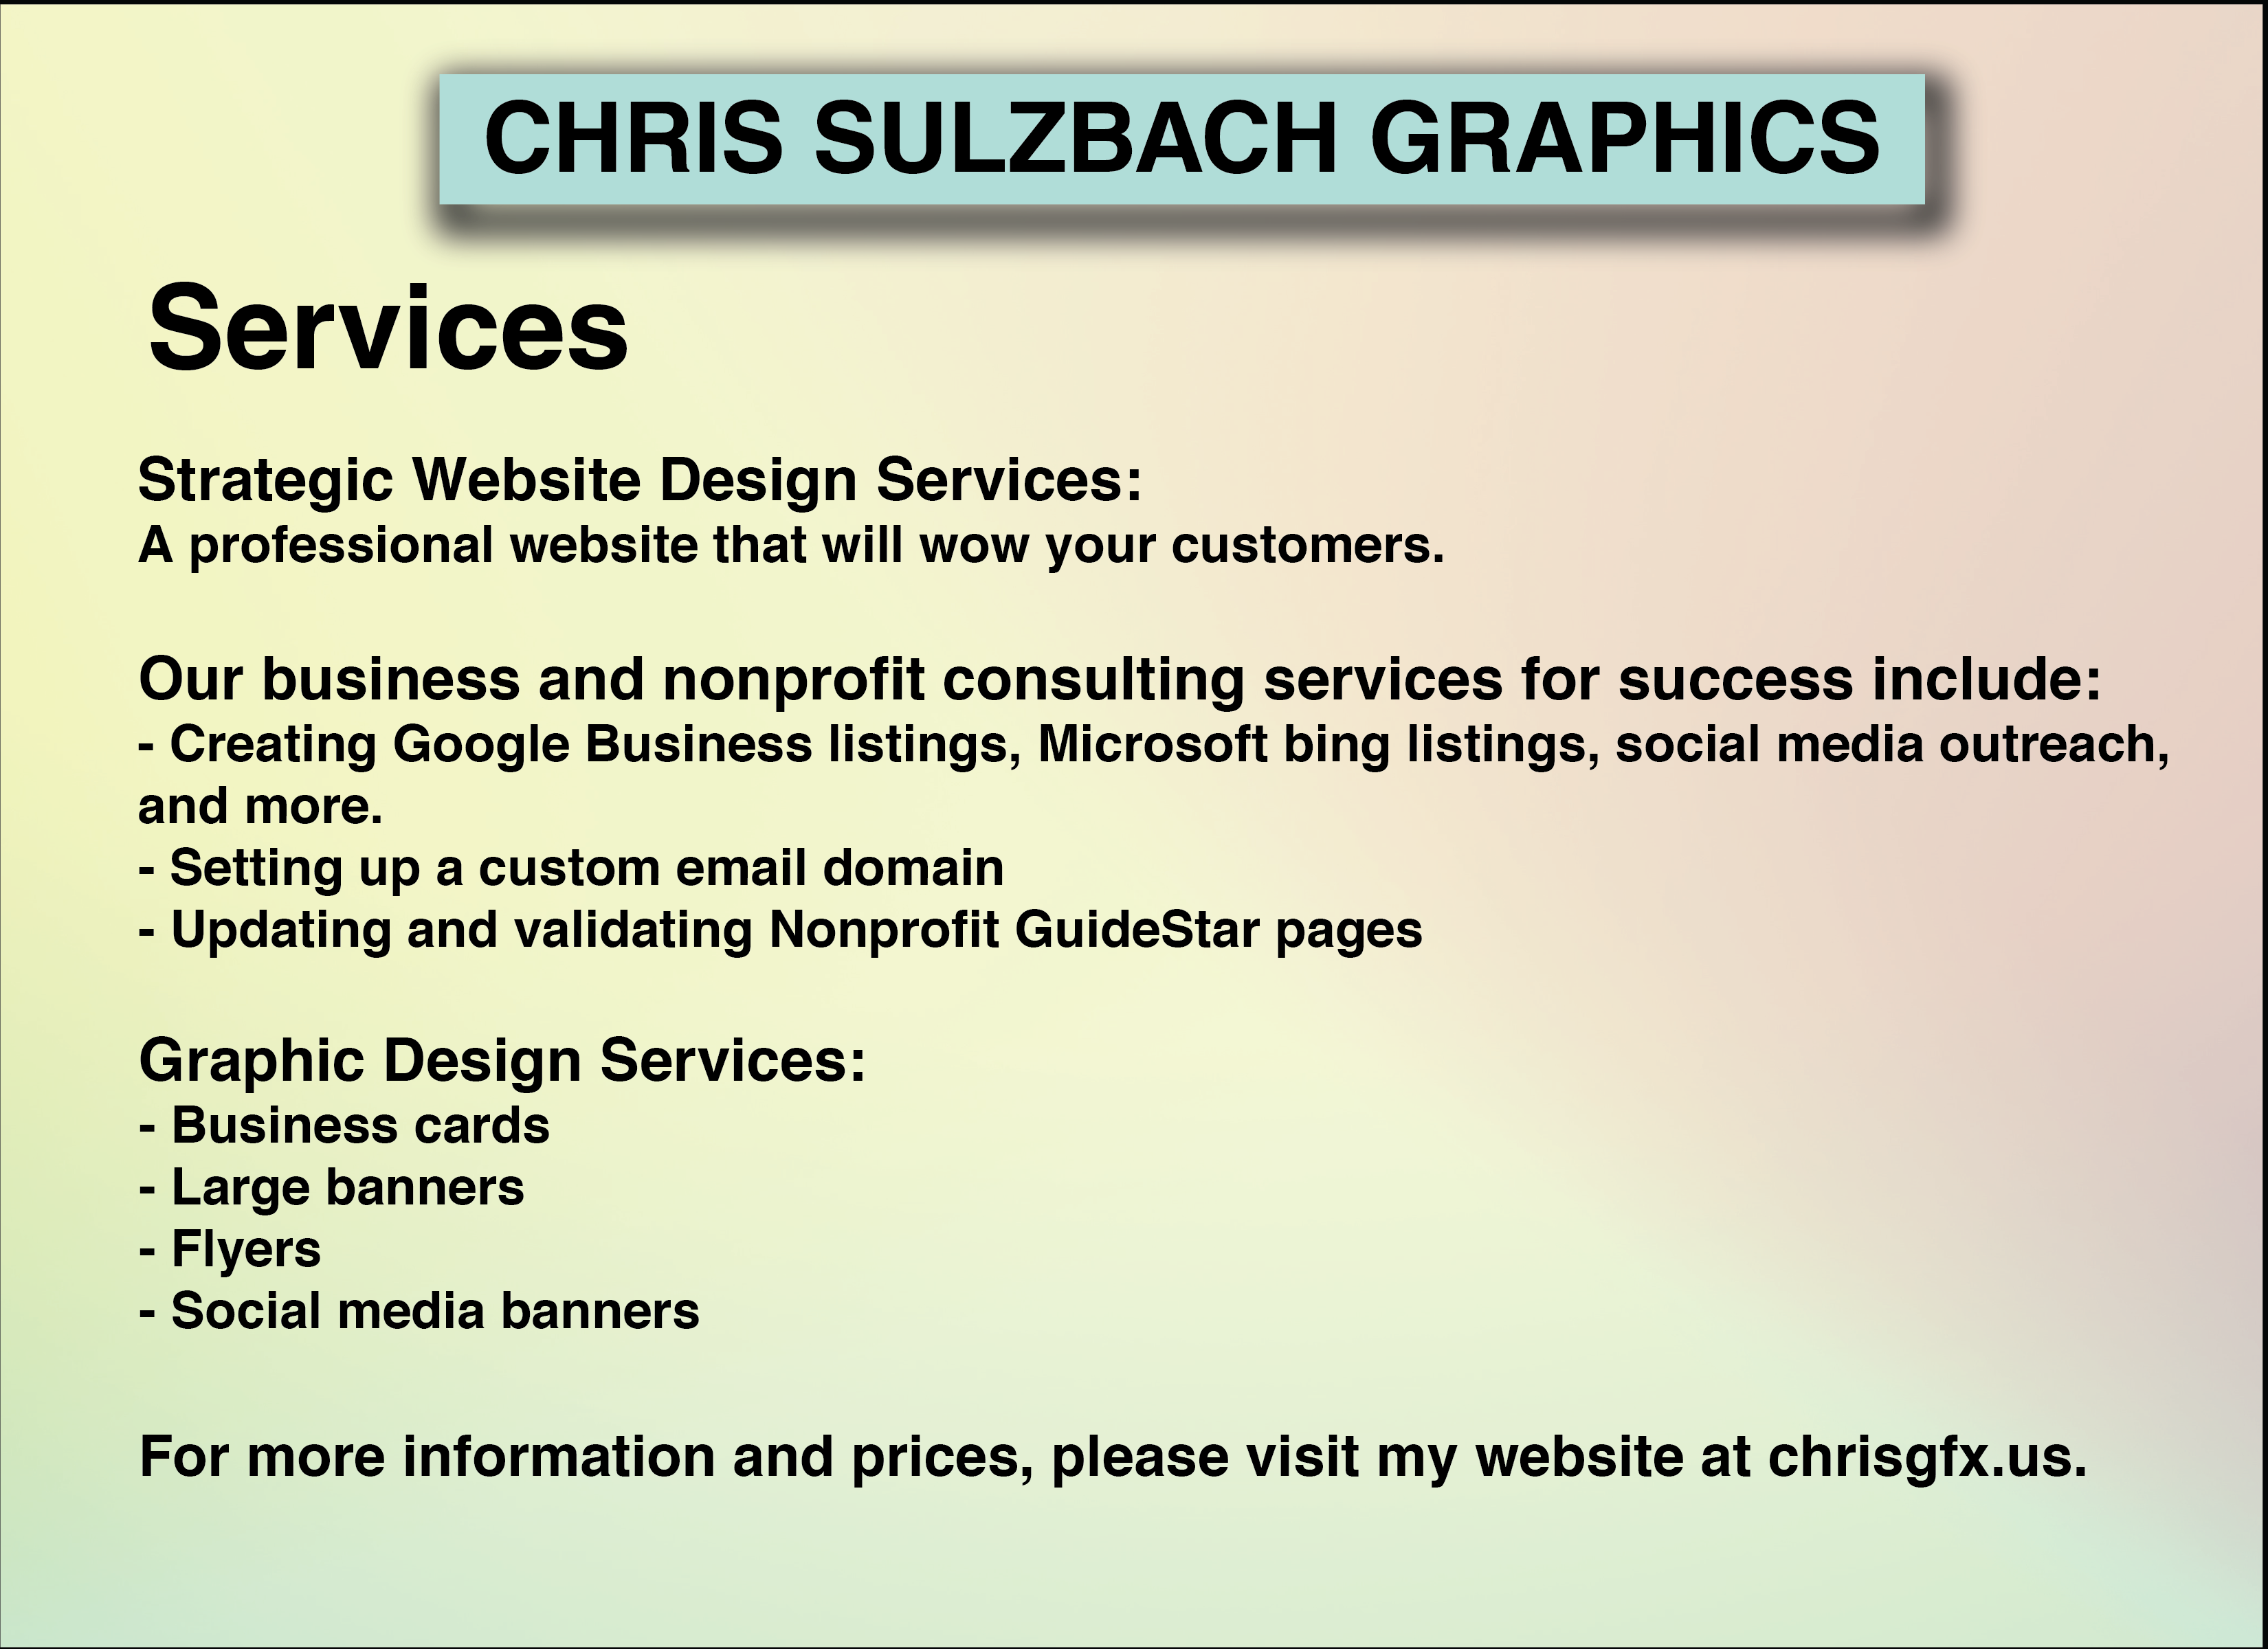 Chris Sulzbach Graphics ad